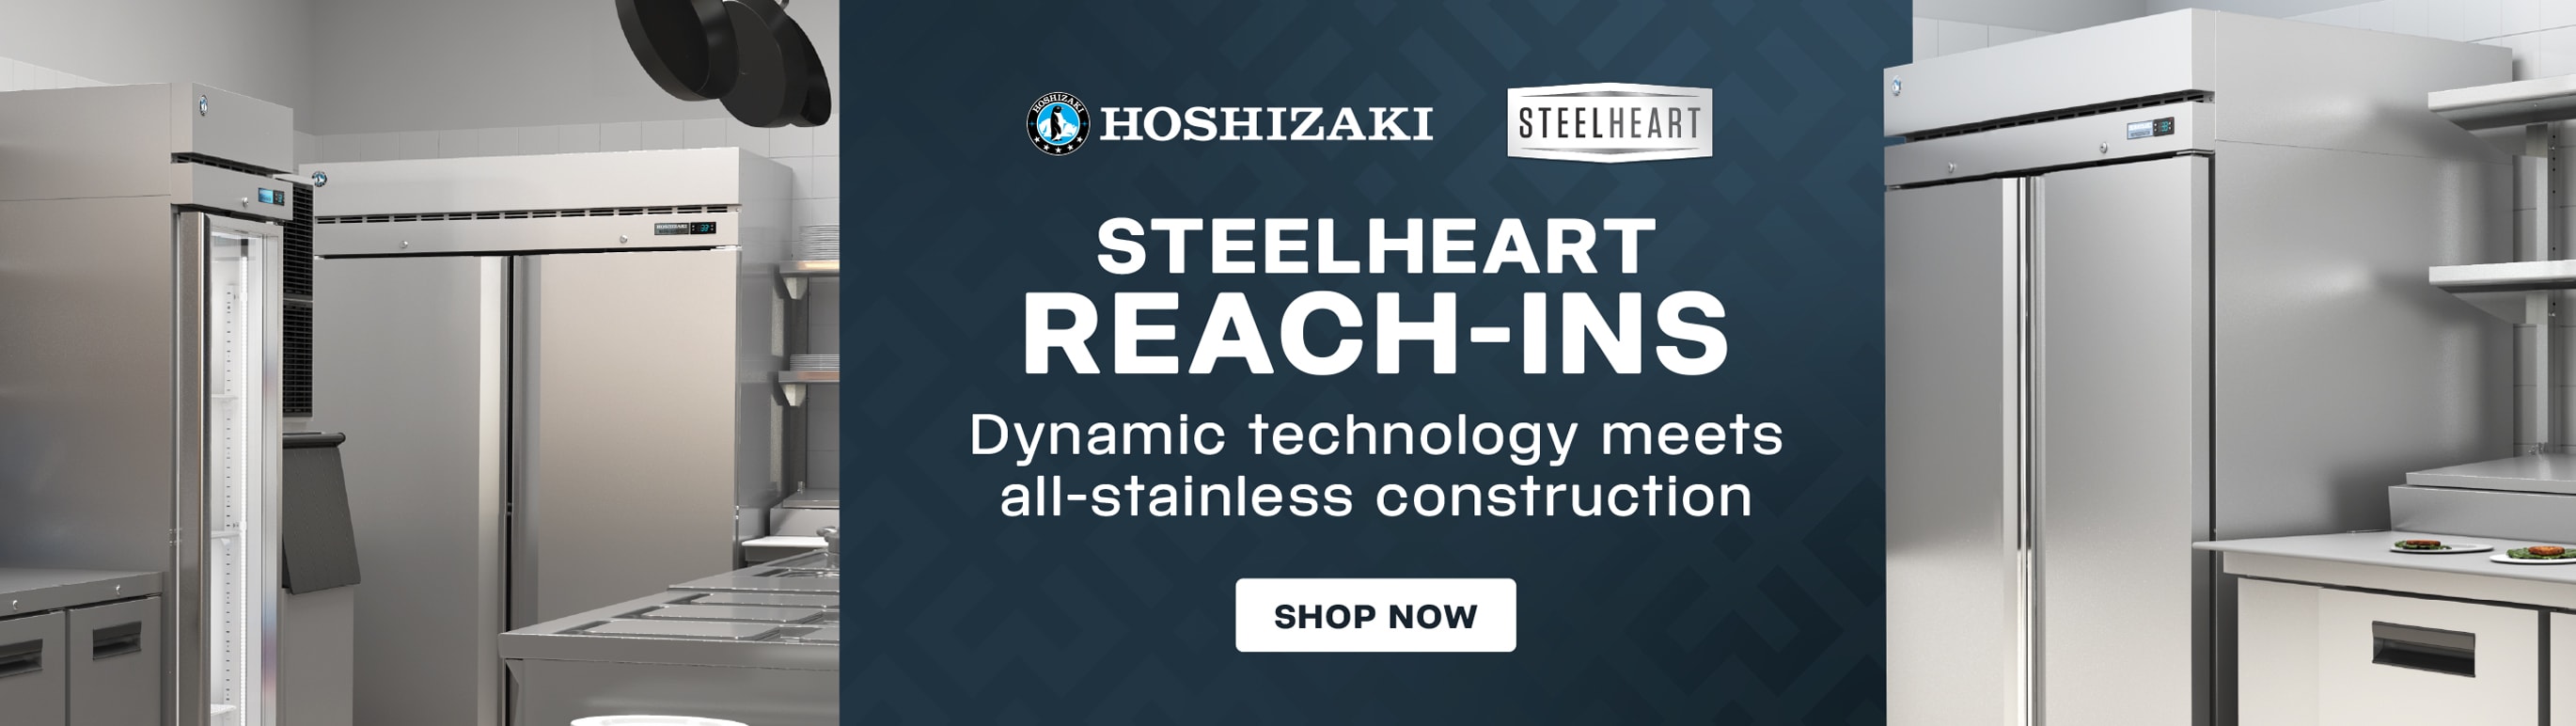 Hoshizaki Steelheart Reach-in Refrigeration